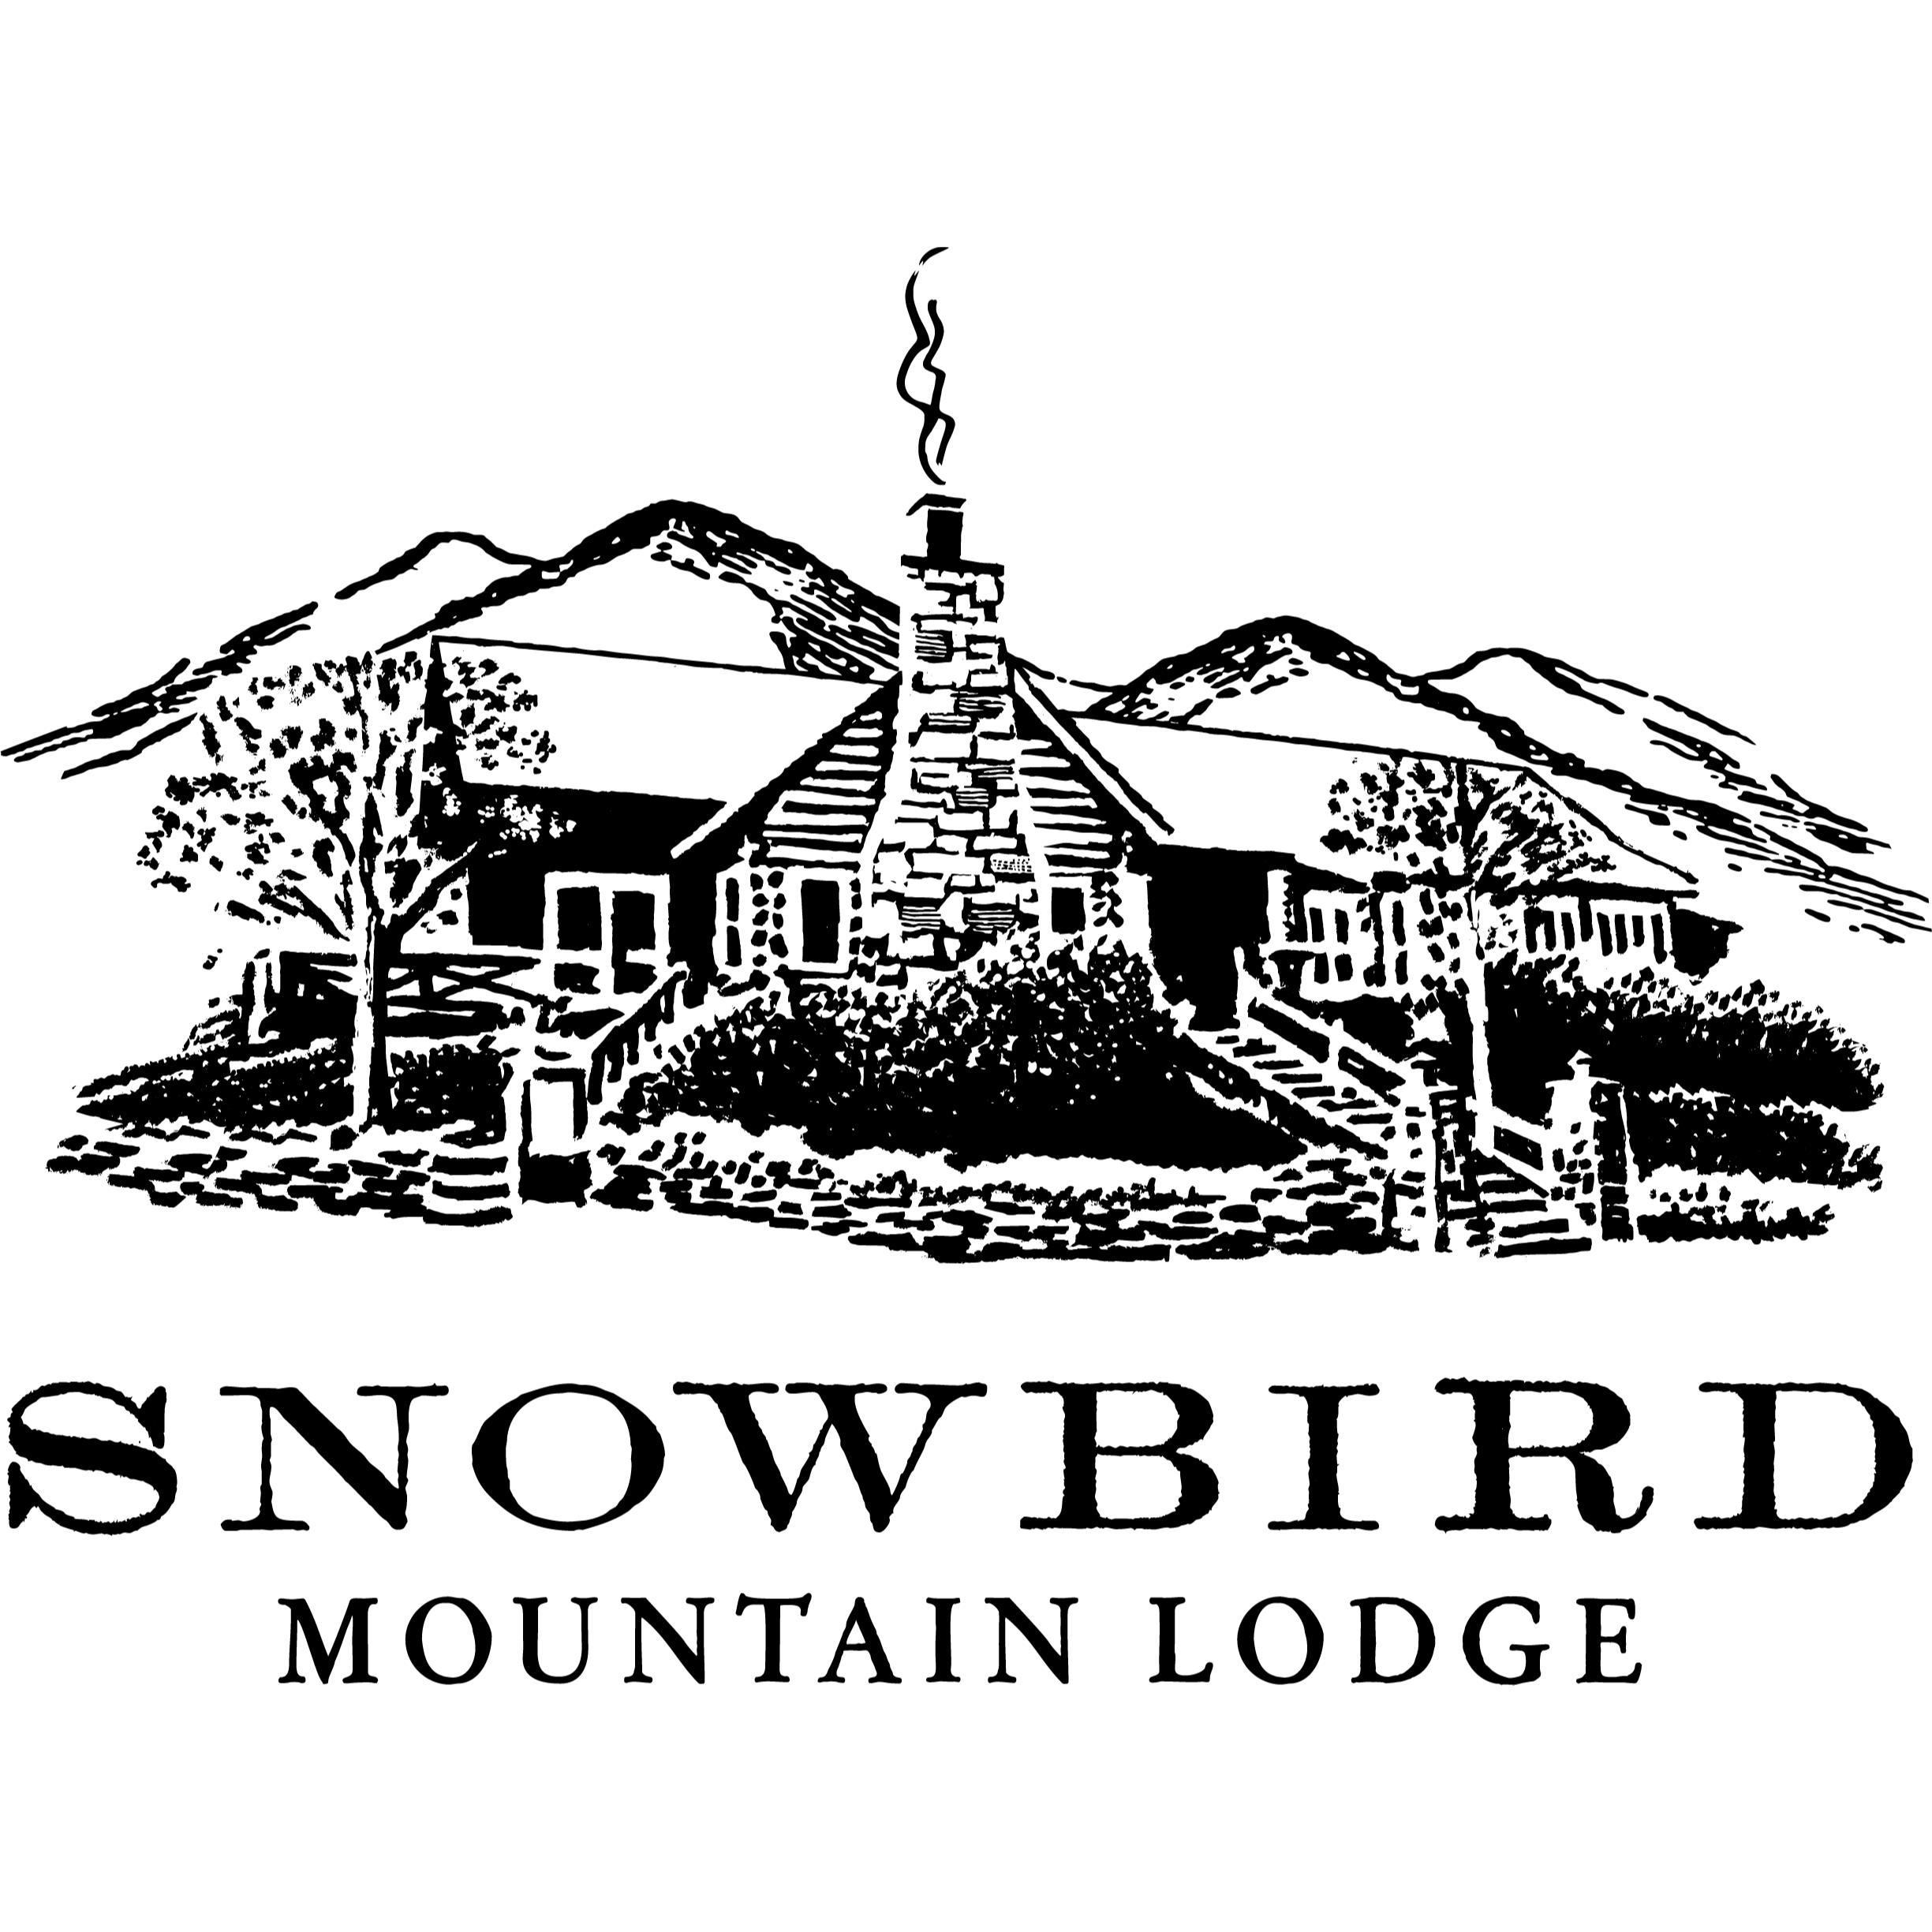 Snowbird Mountain Lodge